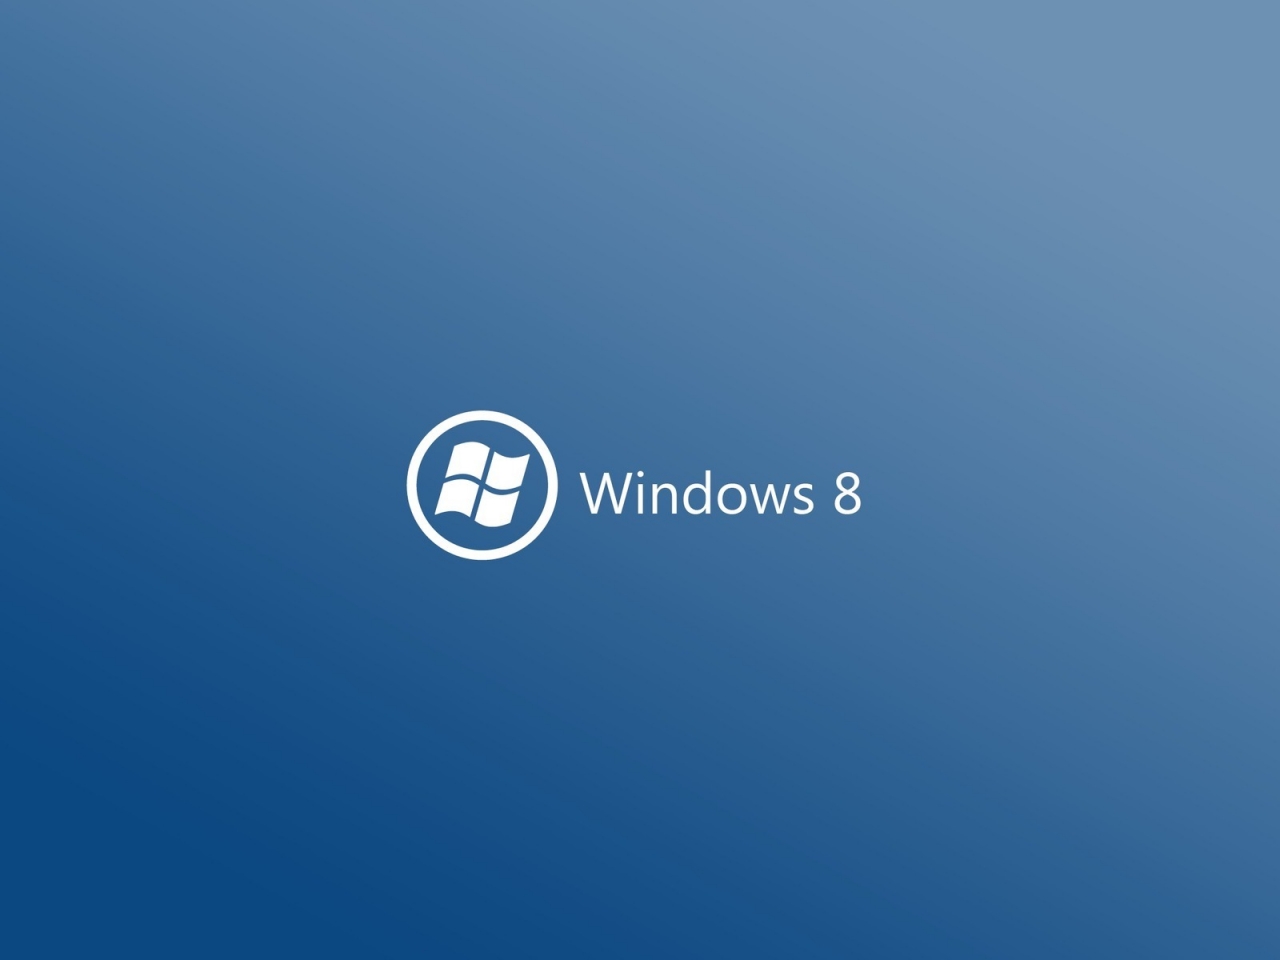 Windows 8 Logo for 1280 x 960 resolution